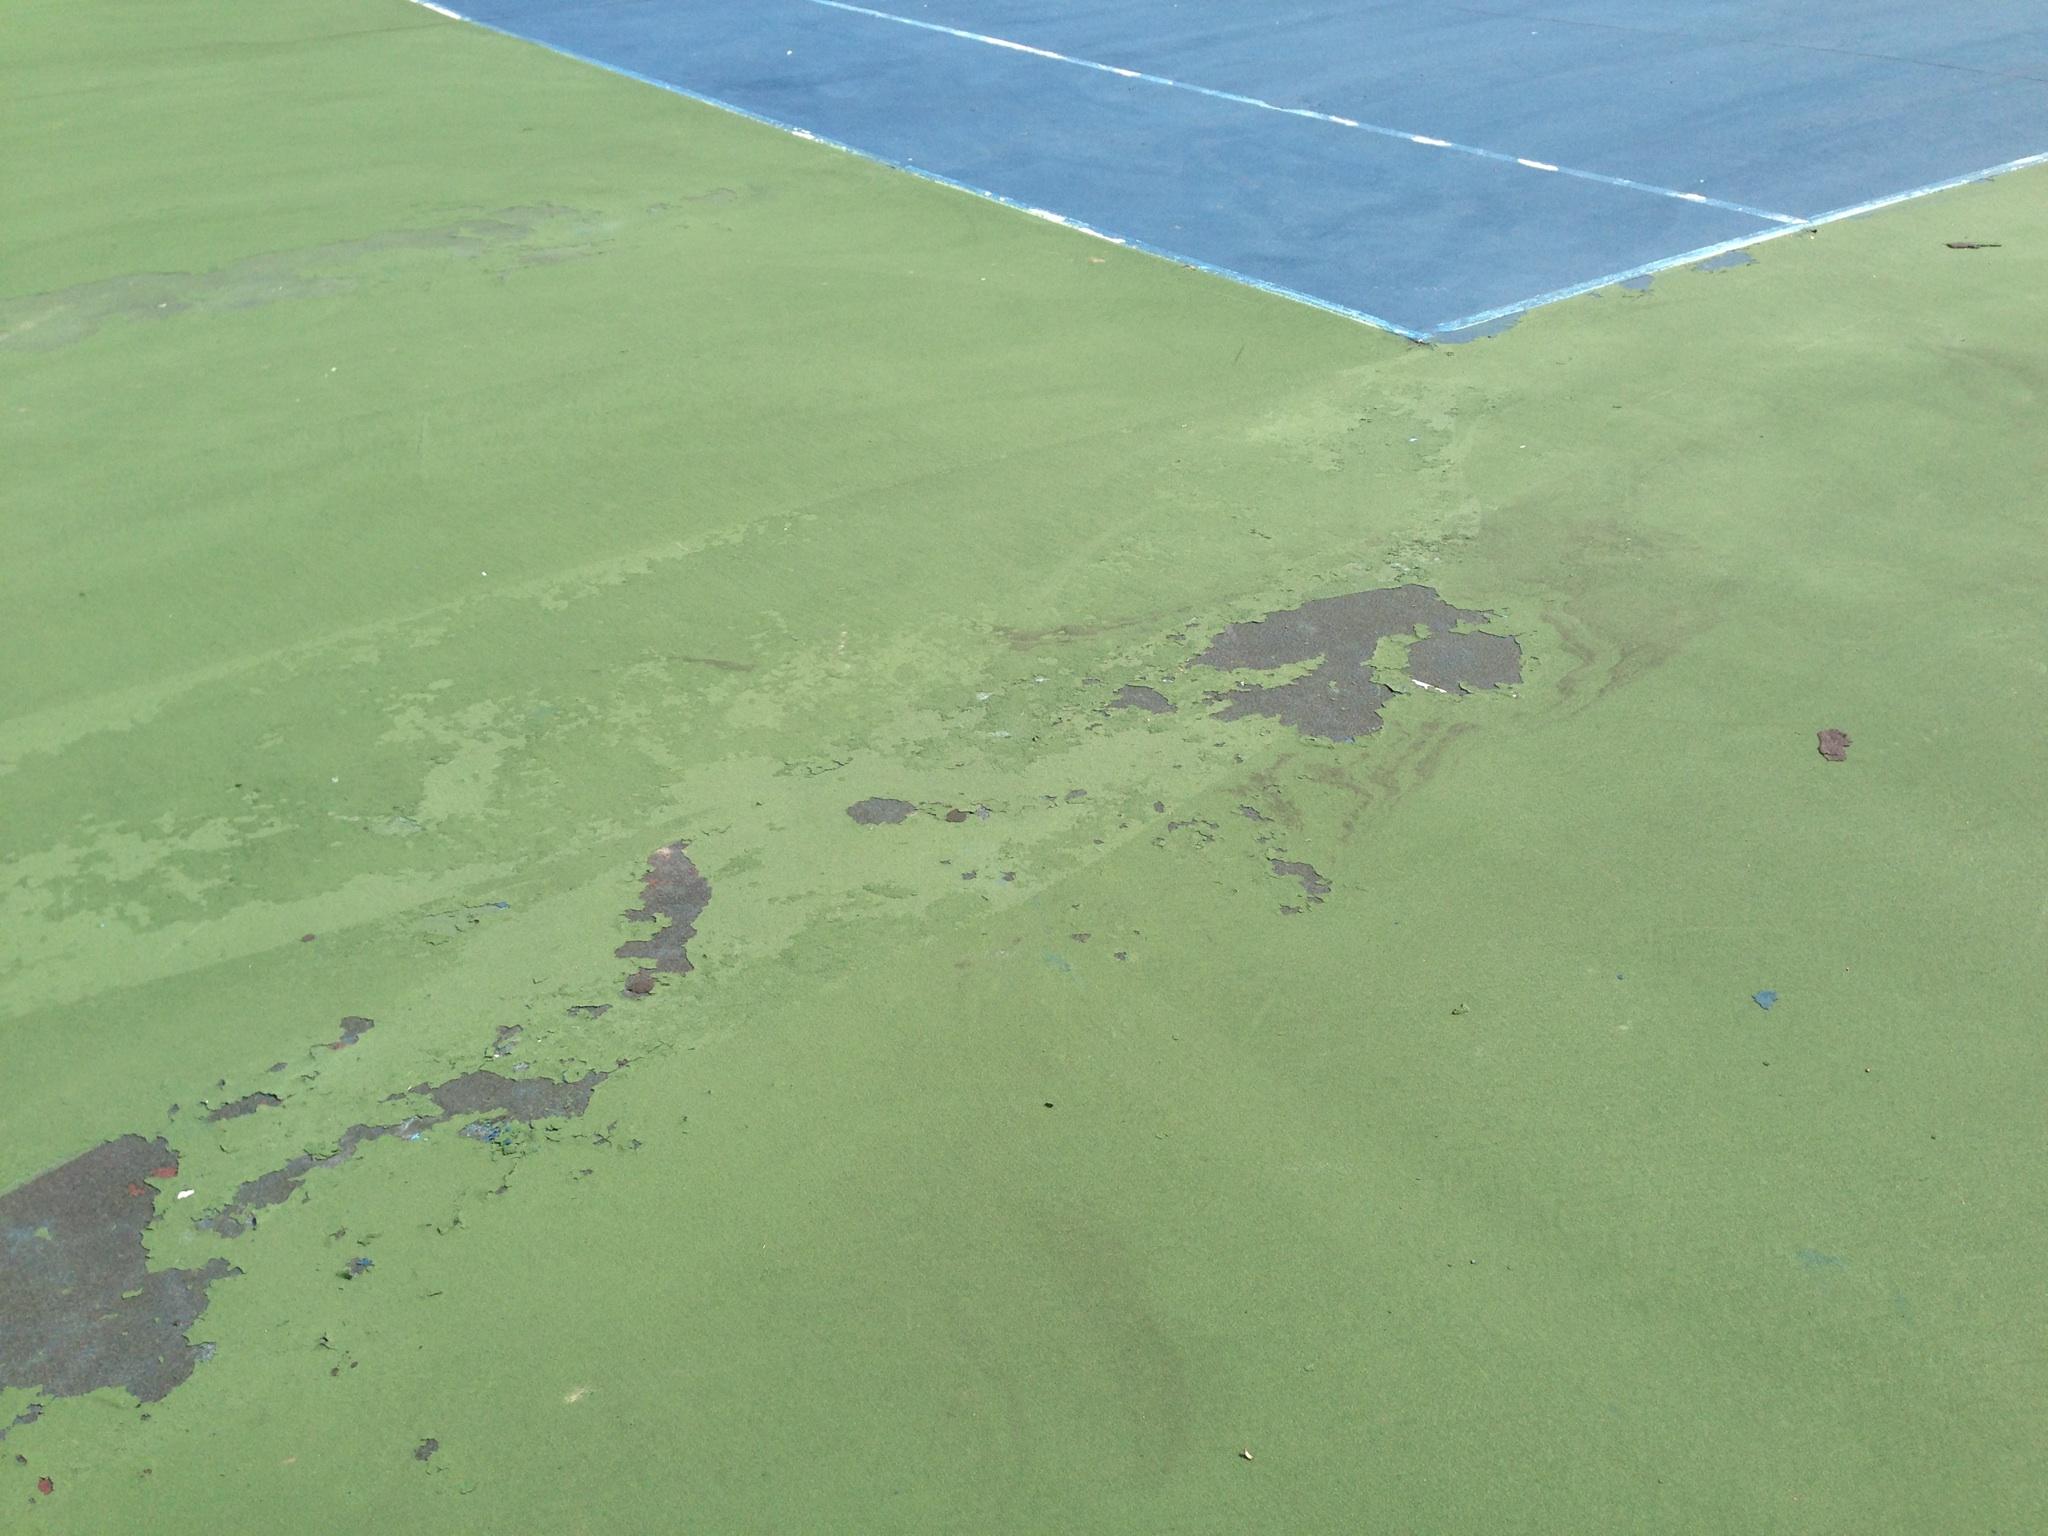 Tennis Court Coating Failure